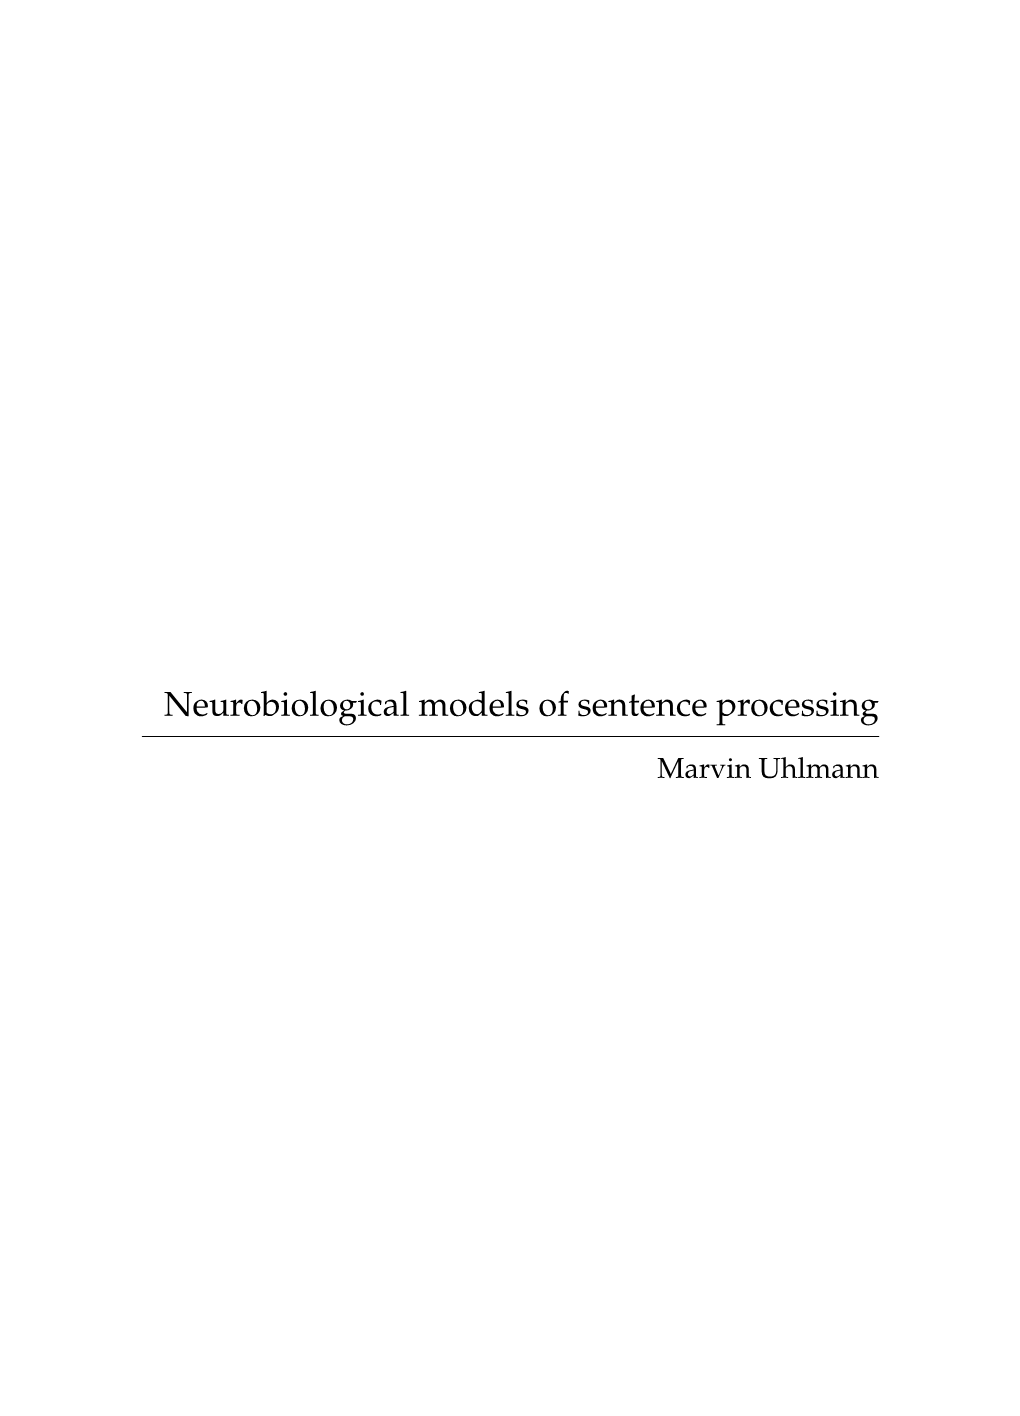 Neurobiological Models of Sentence Processing